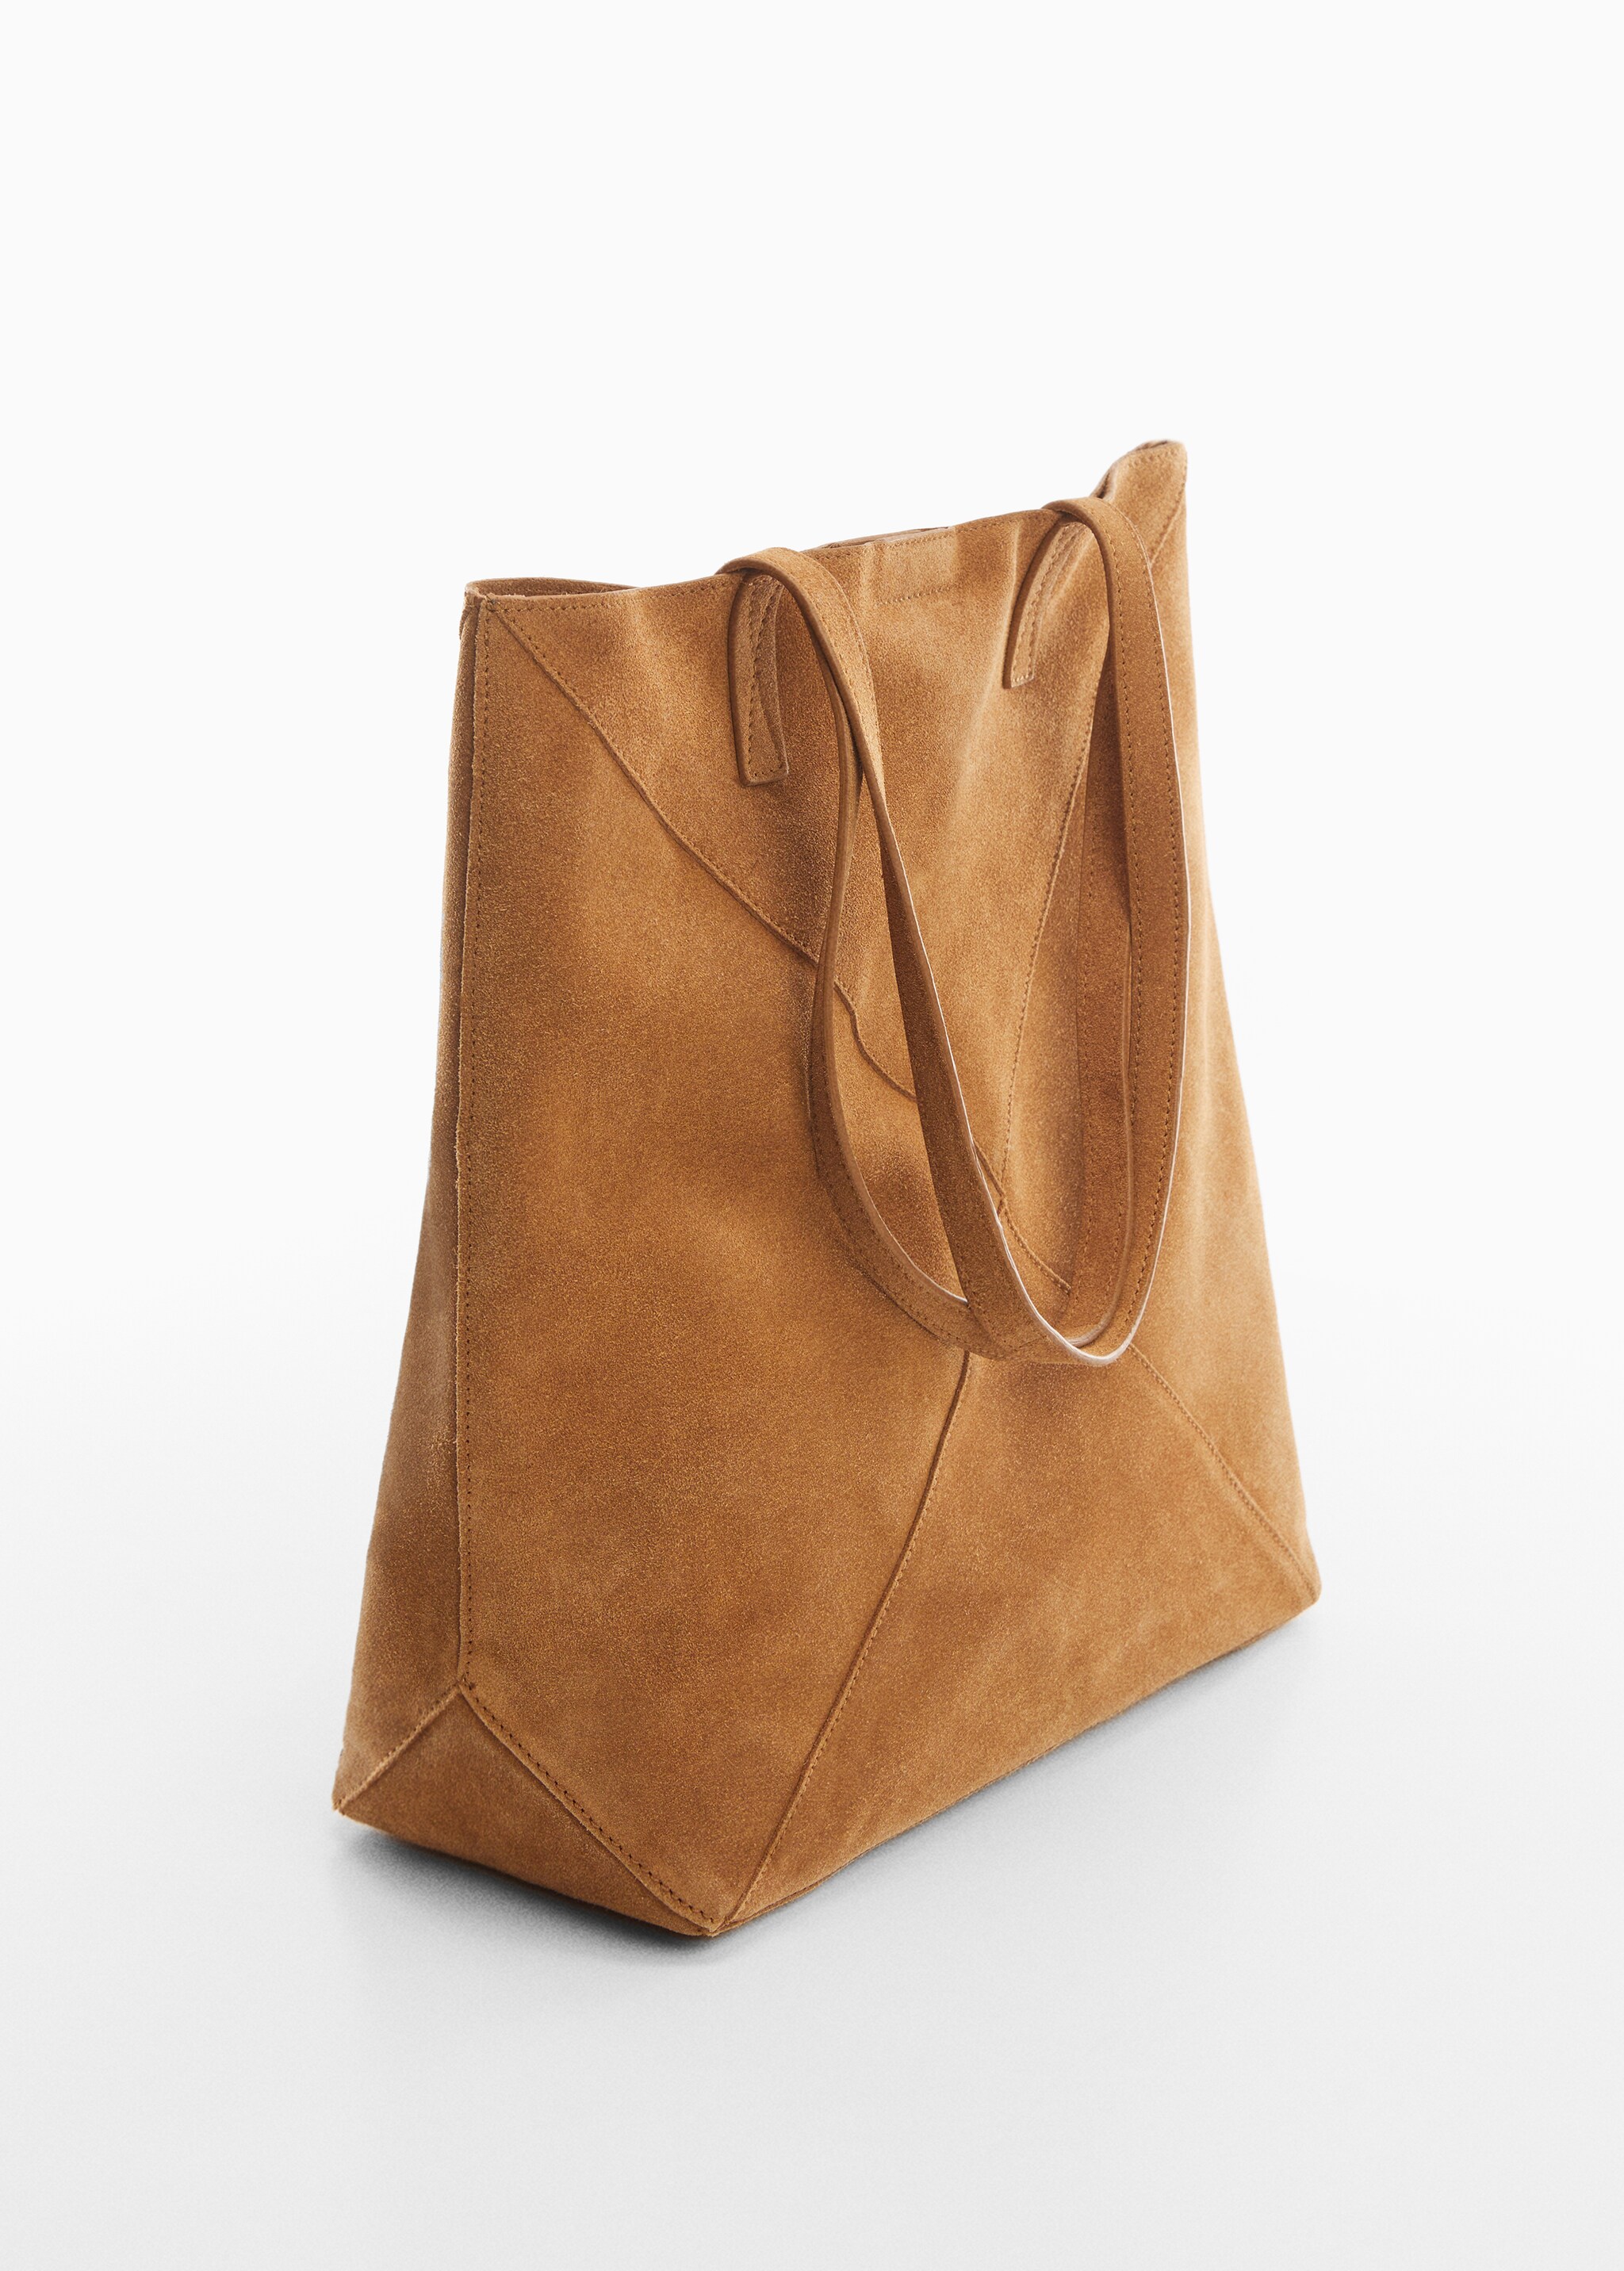 Leather shopper bag - Medium plane